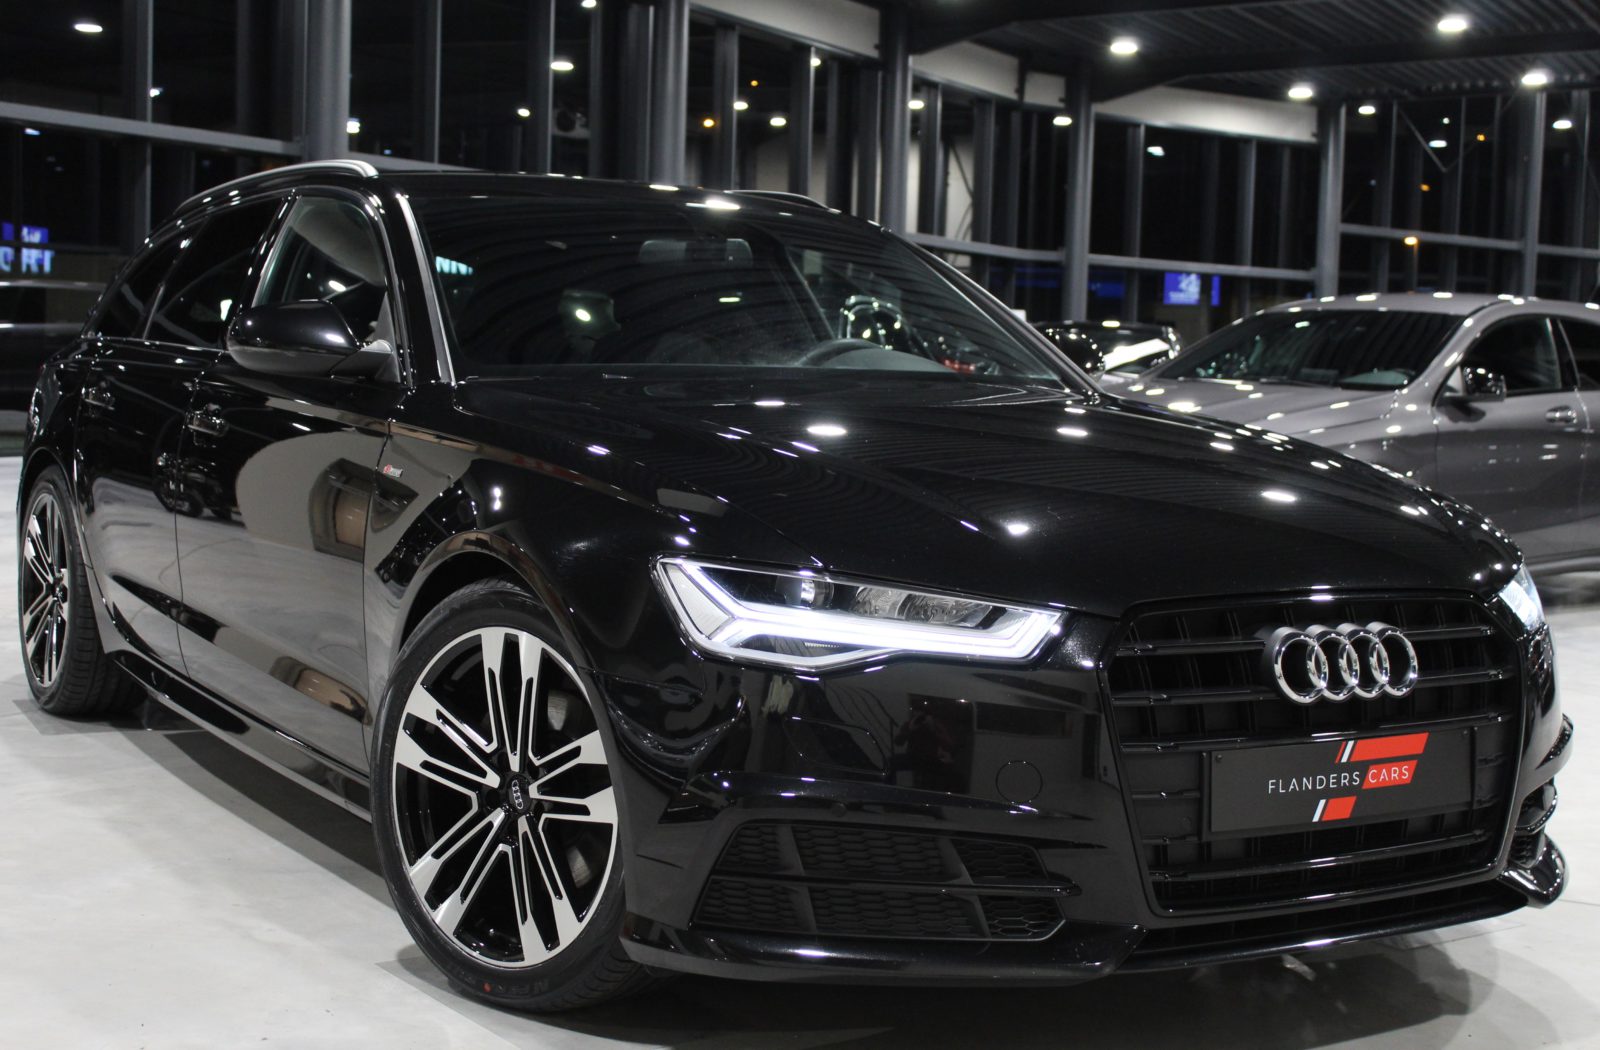 Vooruit Deens naam Audi A6 Avant S-Line Black Edition - Flanders Cars